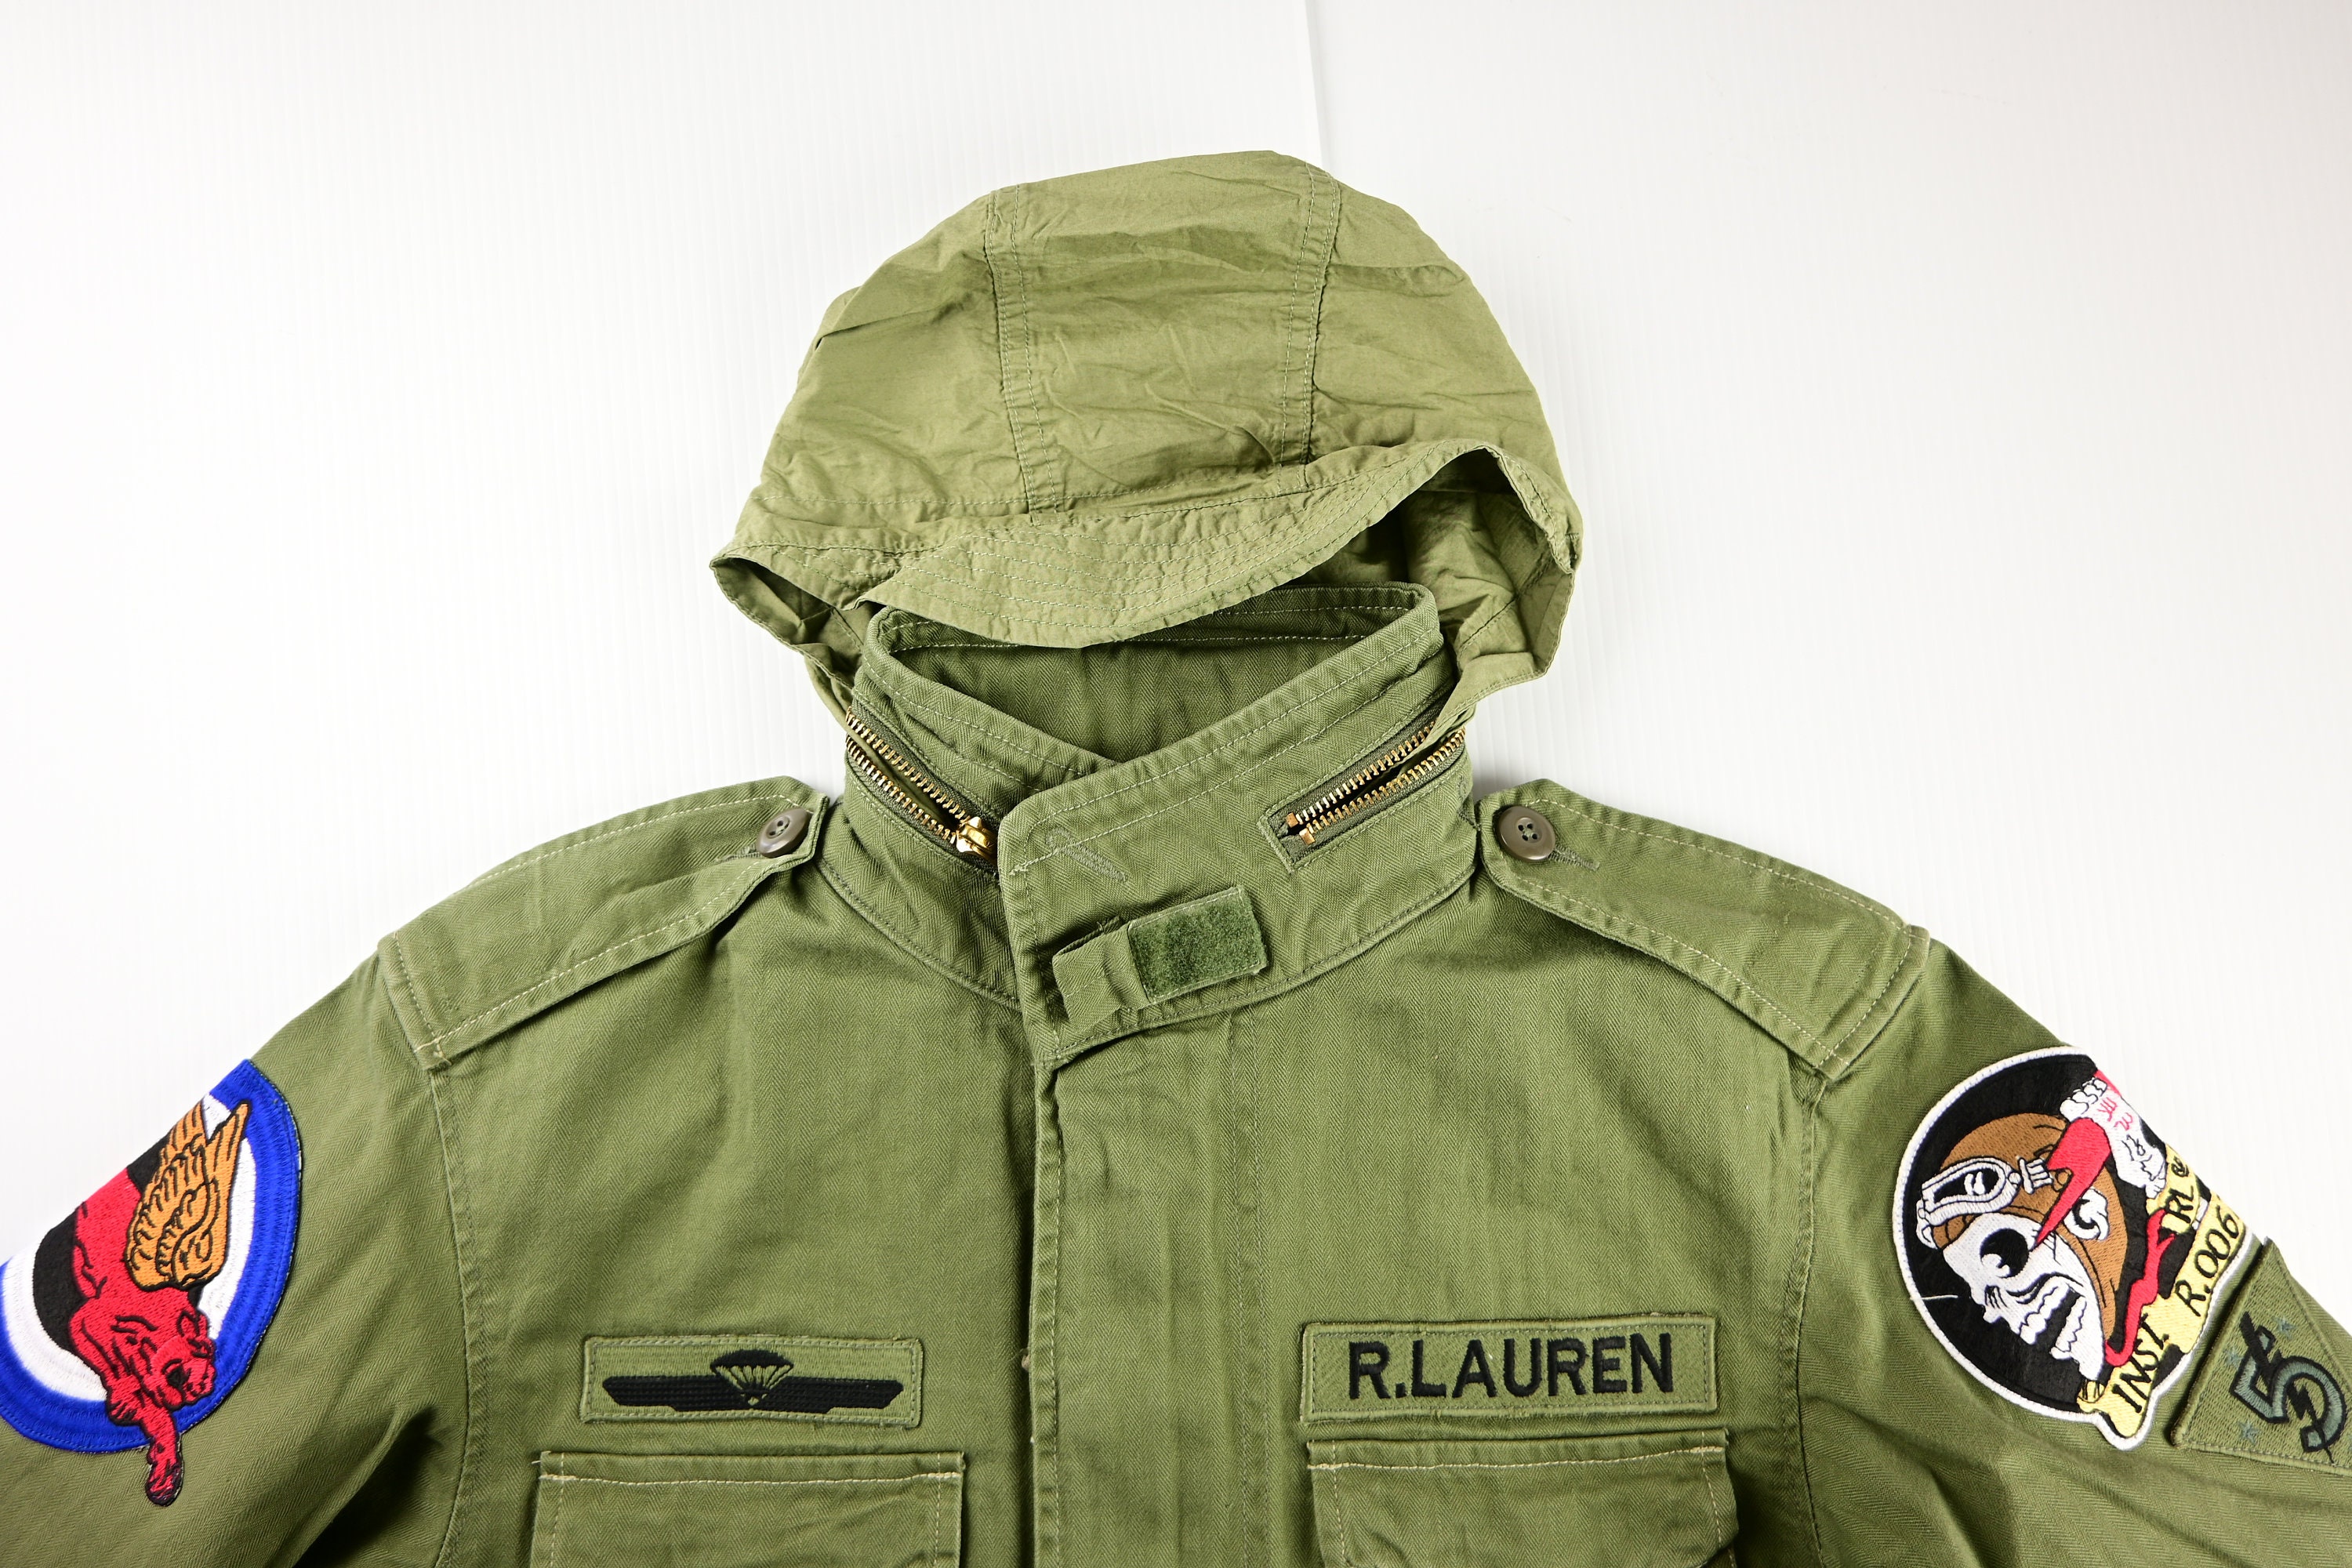 Polo Ralph Lauren Vintage M-65 Military Field Jacket for Men - Etsy